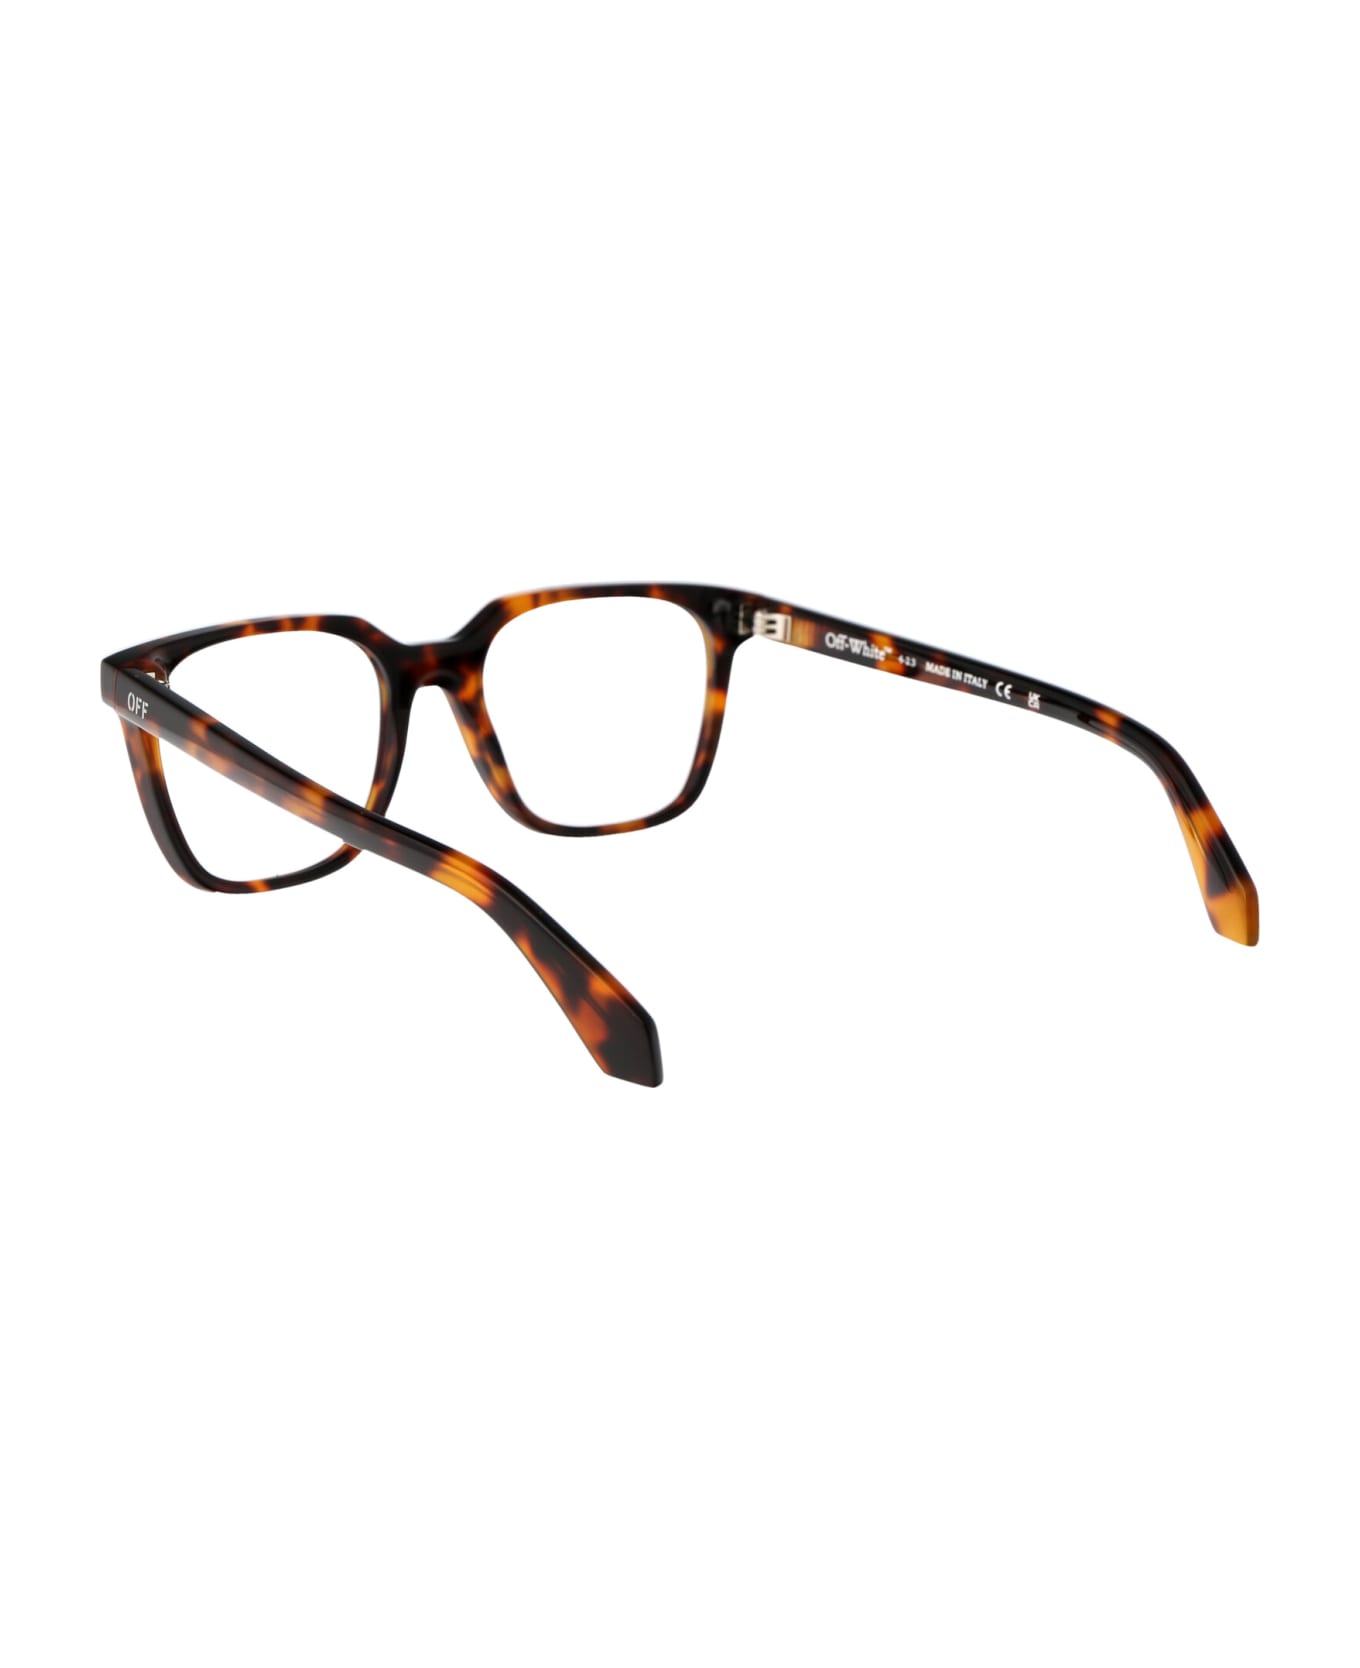 Off-White Optical Style 38 Glasses - 6000 HAVANA